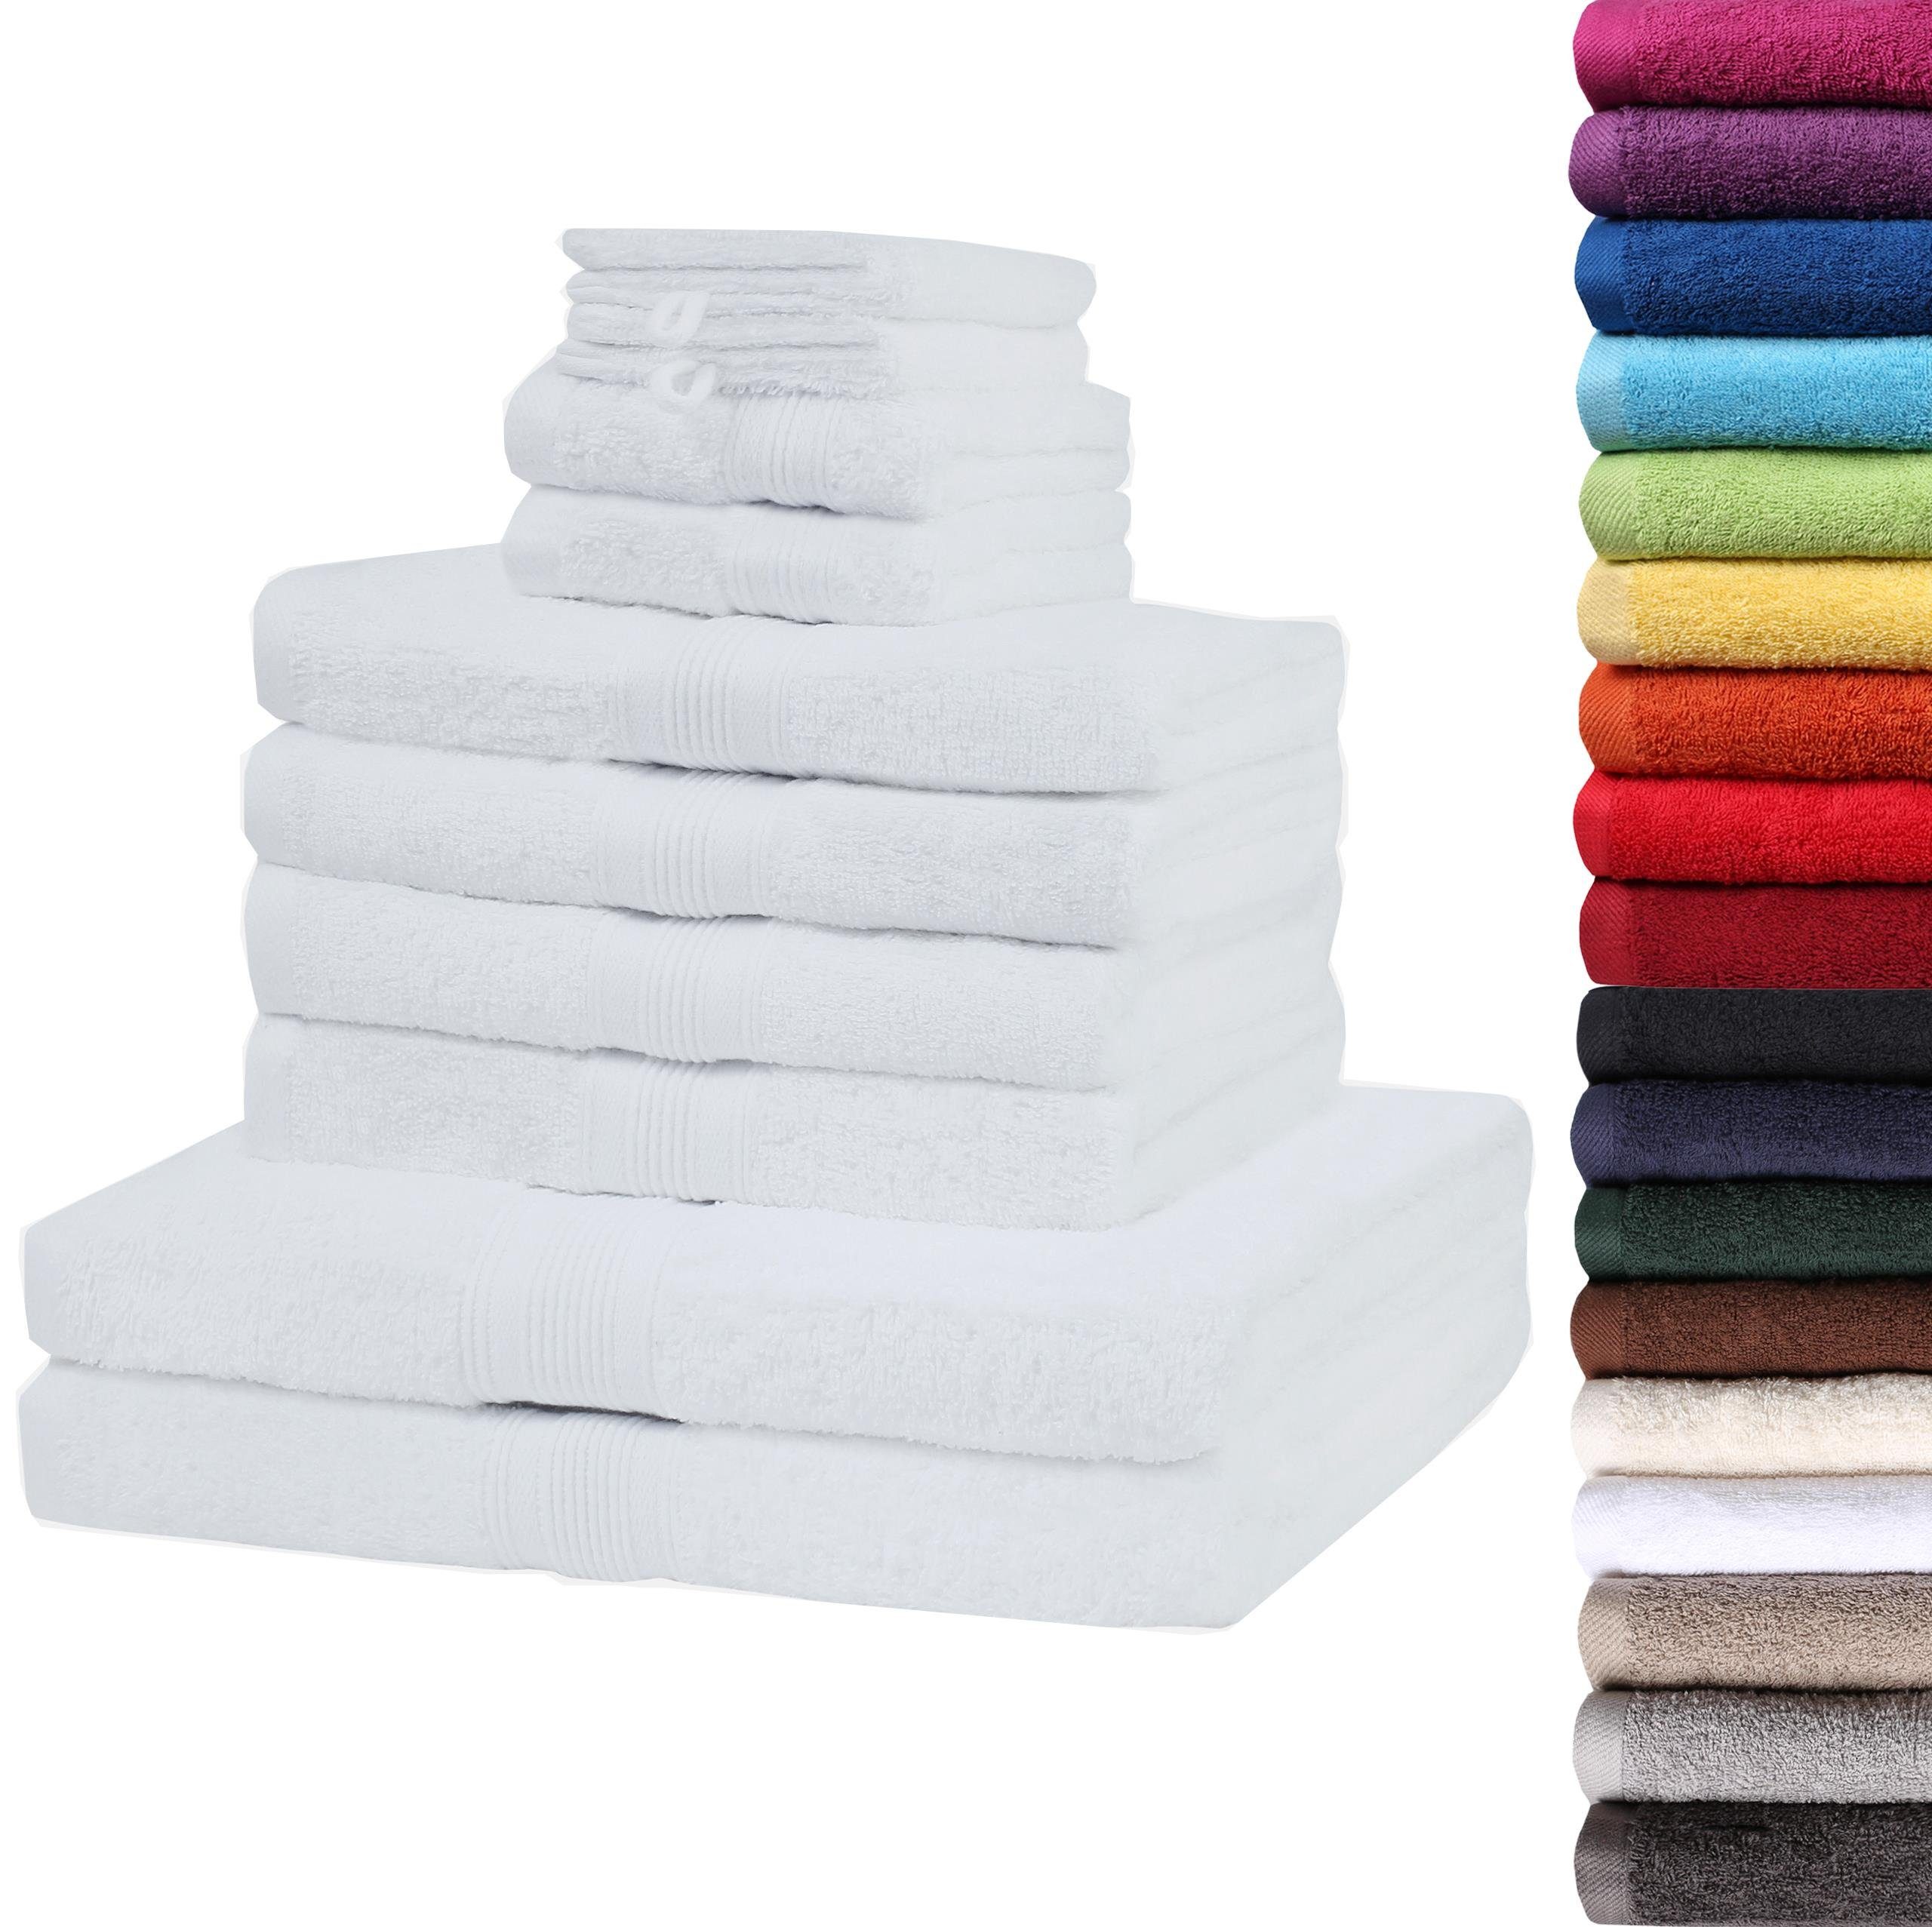 NatureMark Handtuch Set Weiß 100% Gästetücher, (10-tlg), 500gsm, 2X 10tlg. Handtuch-Set 2X Handtücher, Waschhandschuhe 4X Baumwolle, Duschtücher, 2X